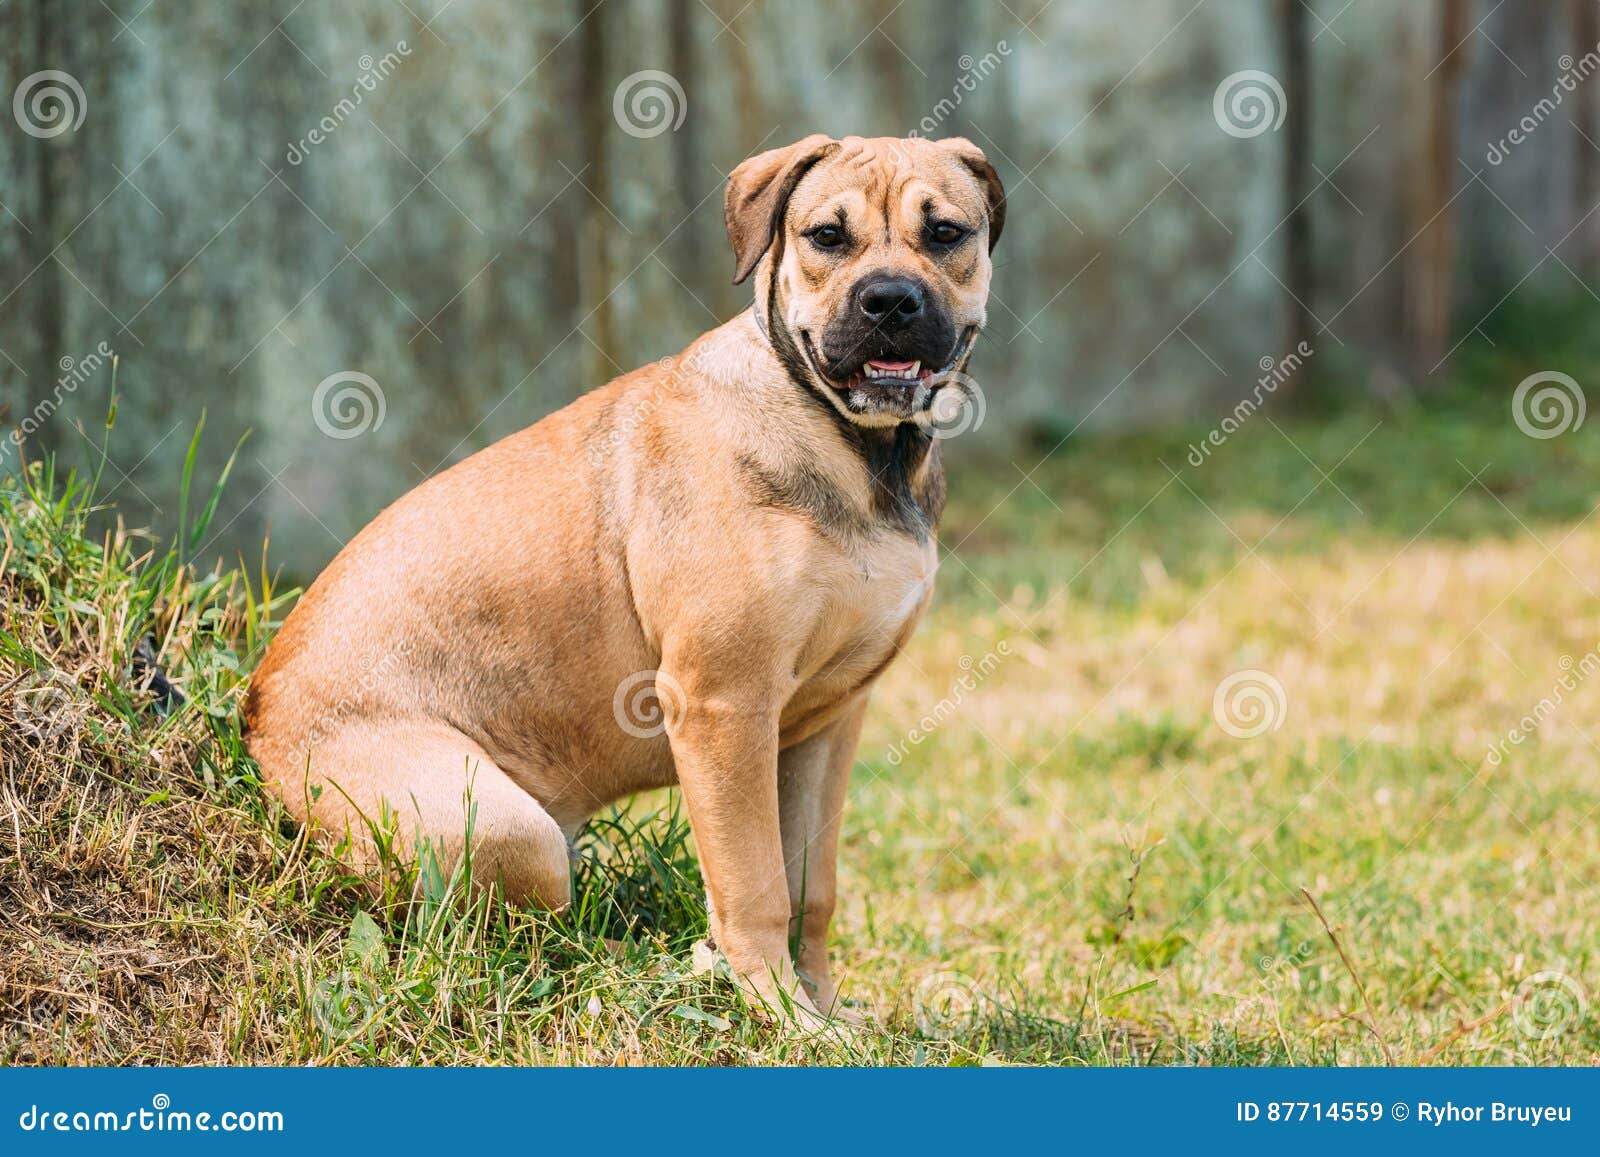 ca de bou or perro de presa mallorquin puppy sit outdoor on green grass